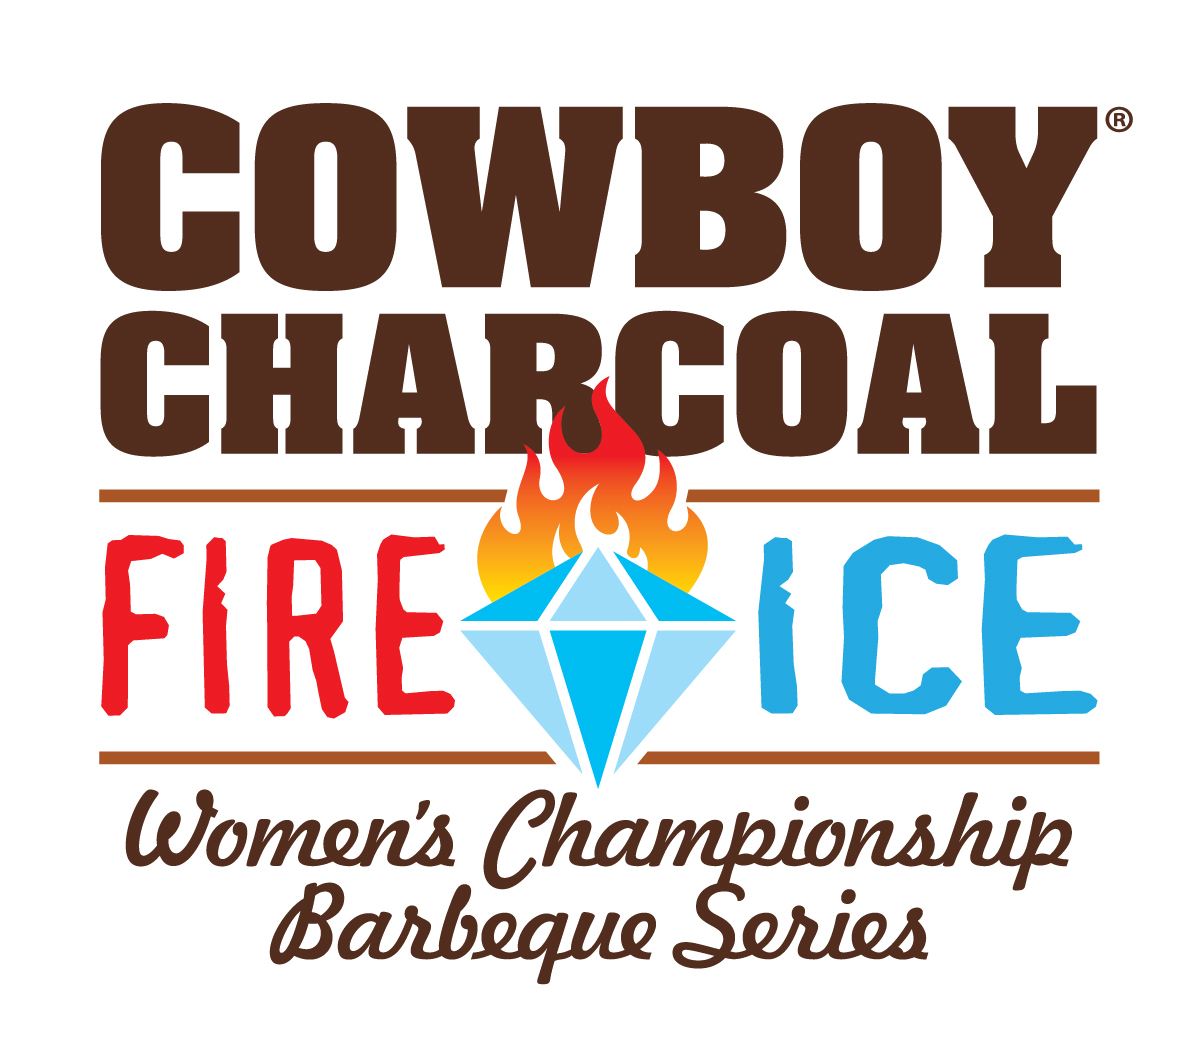 * 2016 Cowboy Fire & Ice Championship Logo -- cowboy_fireice_logo.jpg